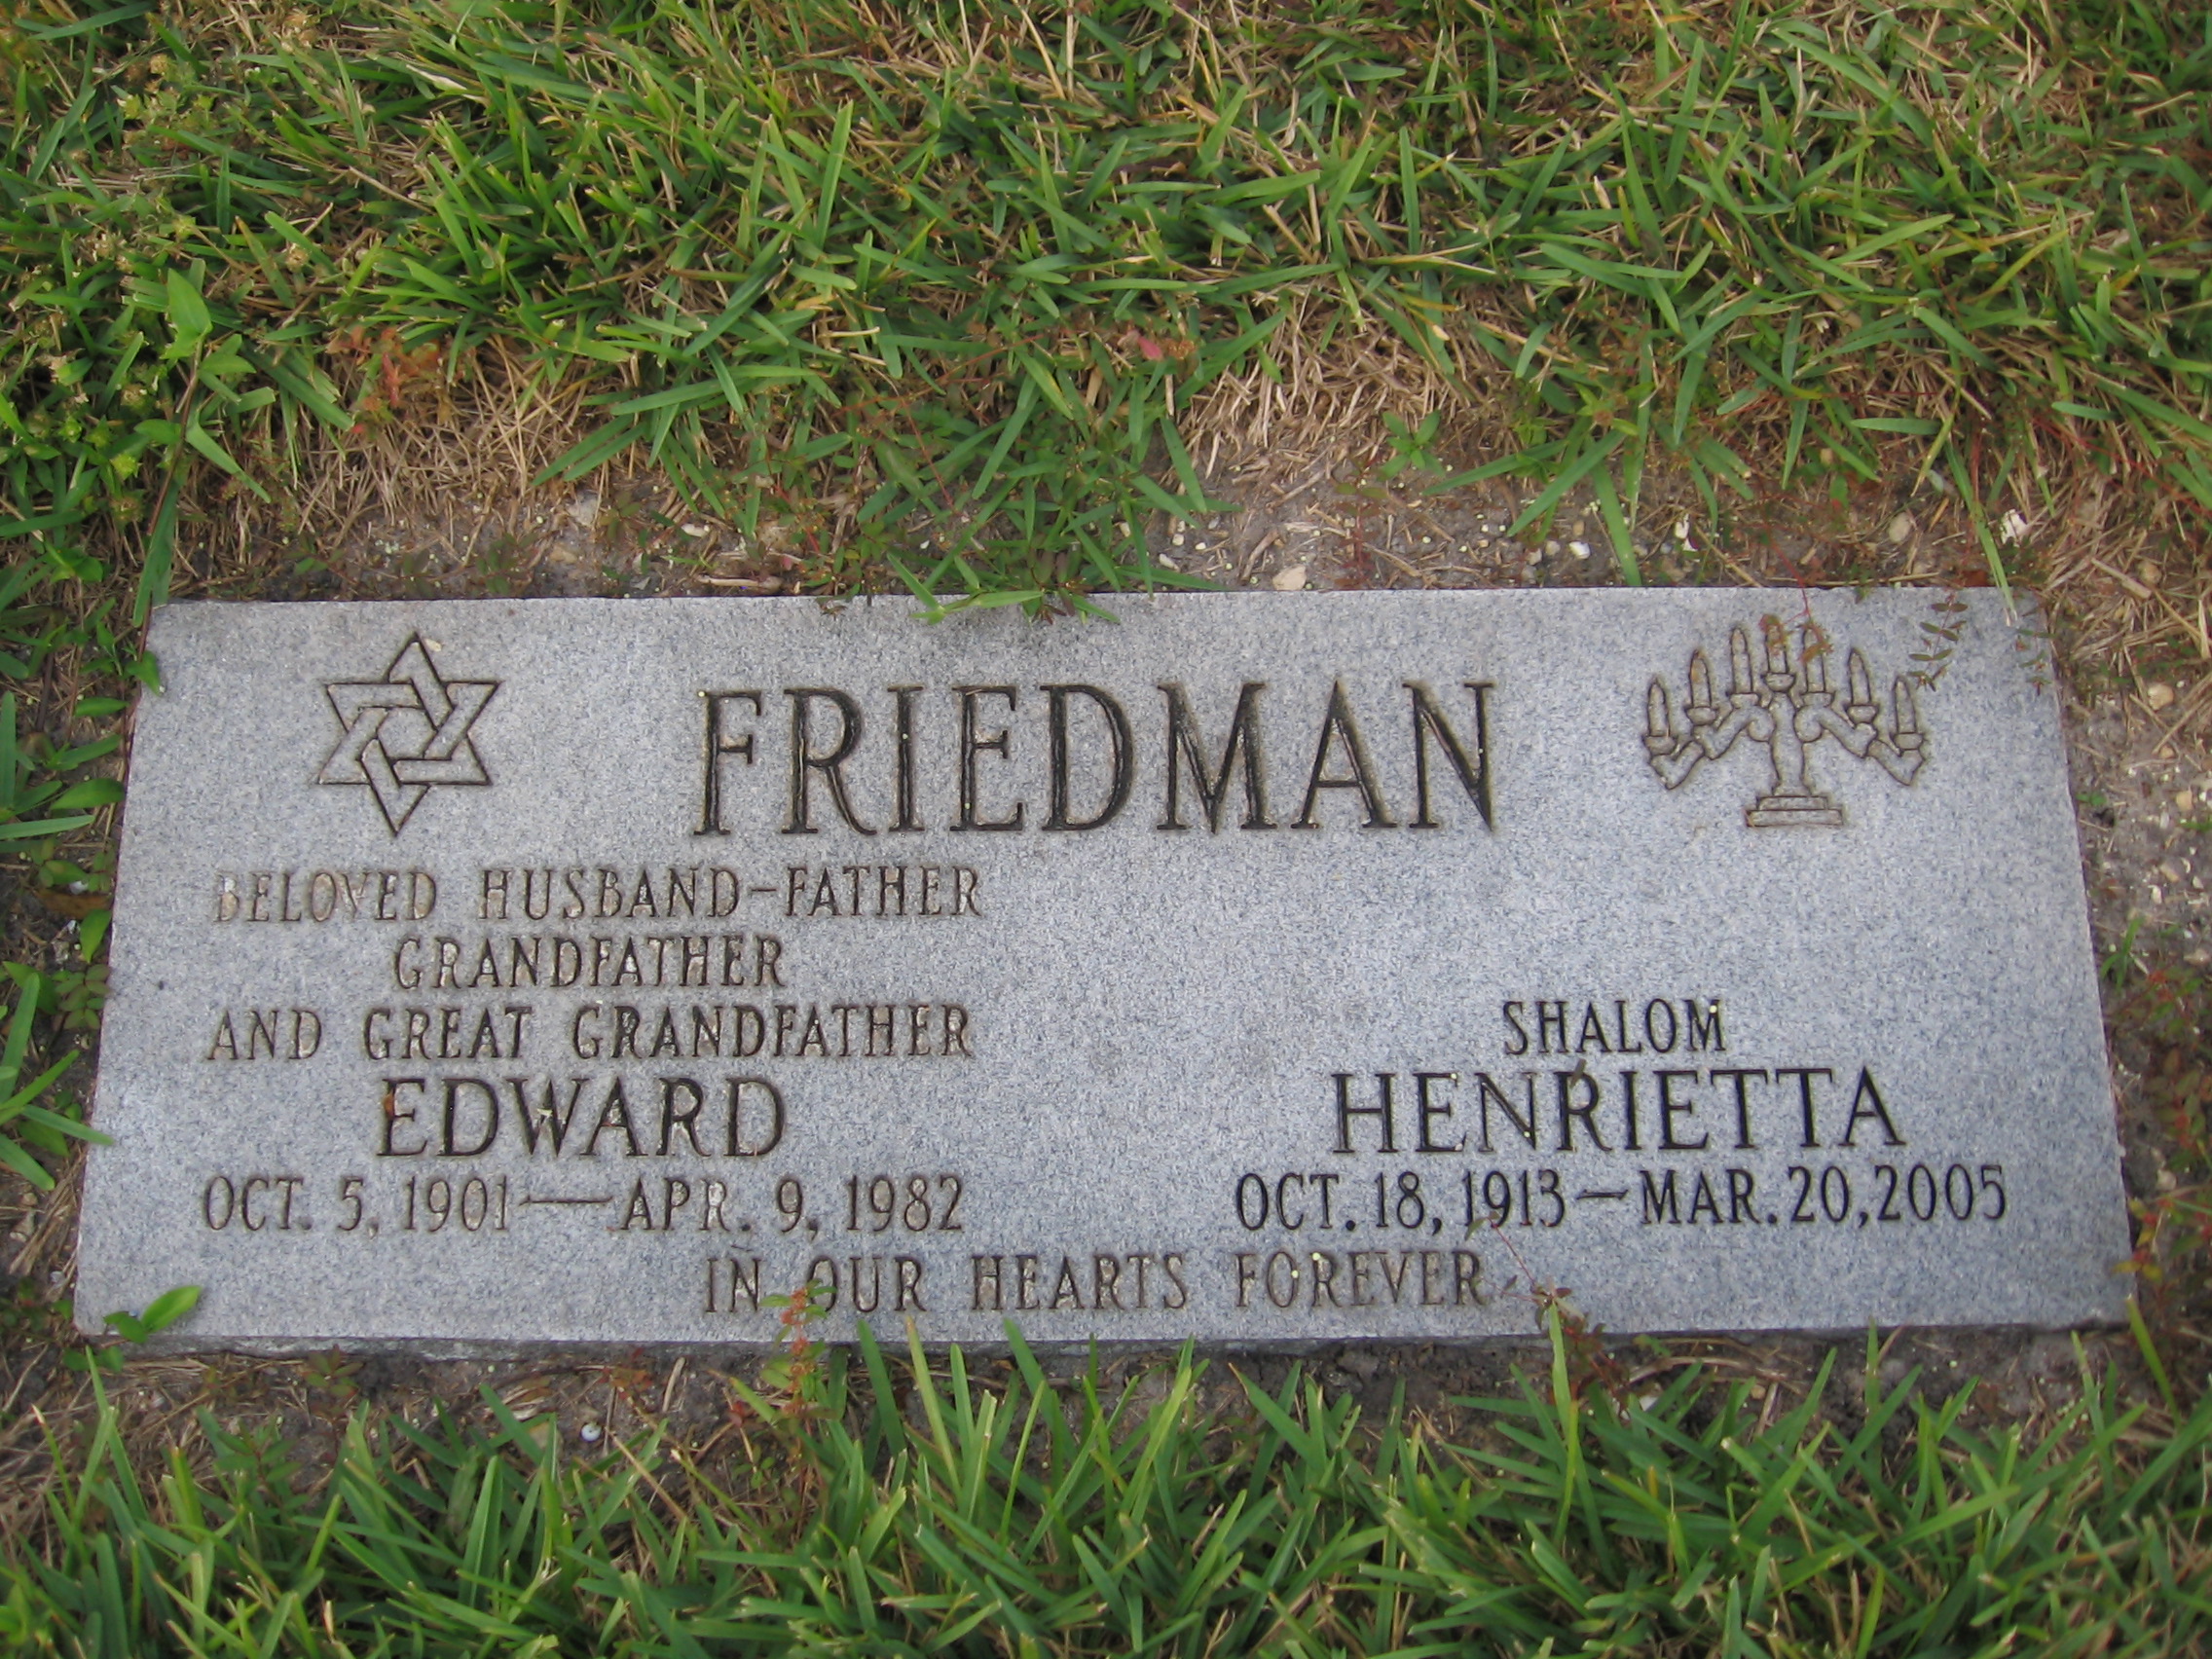 Edward Friedman